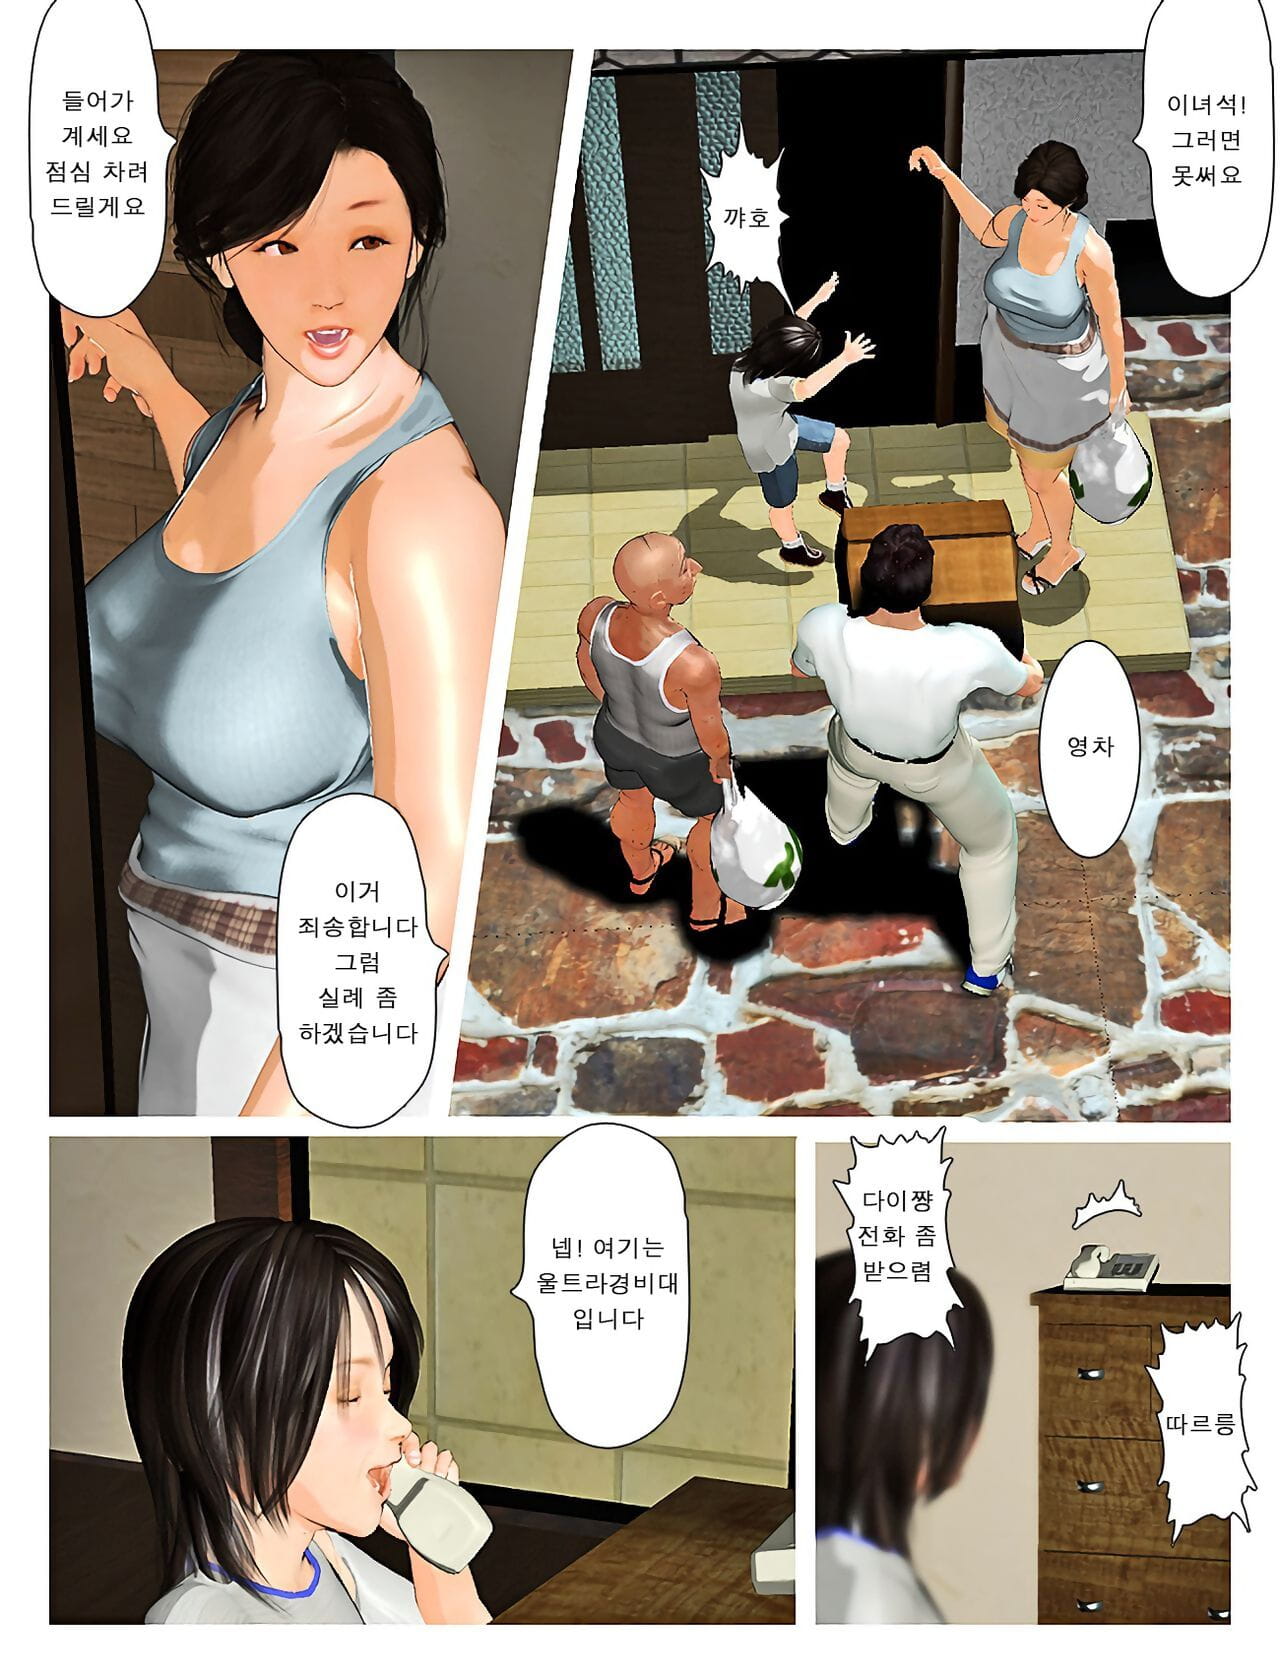 Kyou keine misako san 2019:3 오늘의 미사코씨 2019:3 page 1